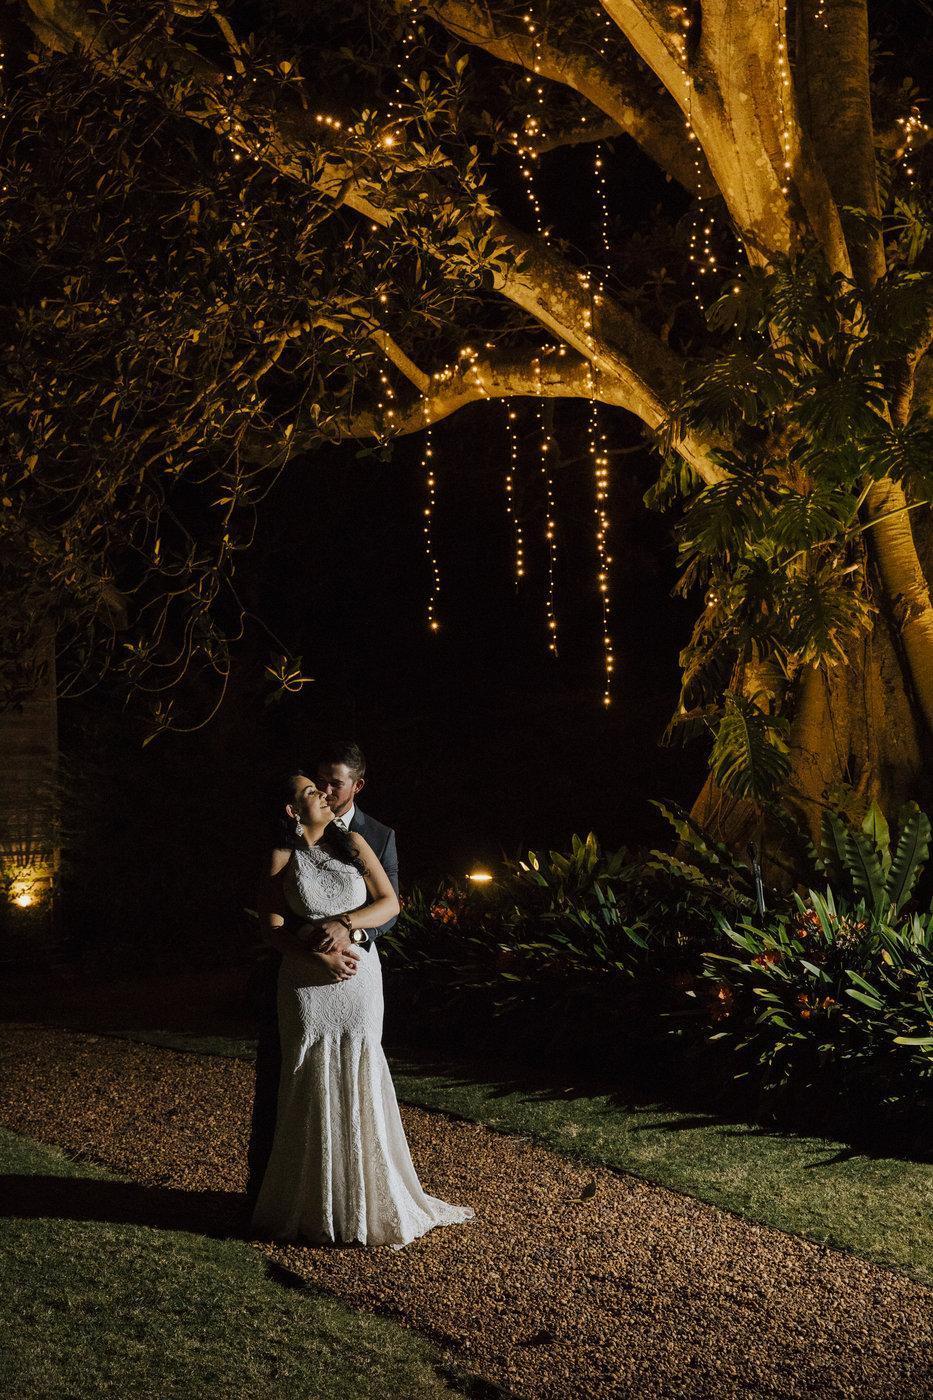 Wedding Photography - reception couple under tree at night